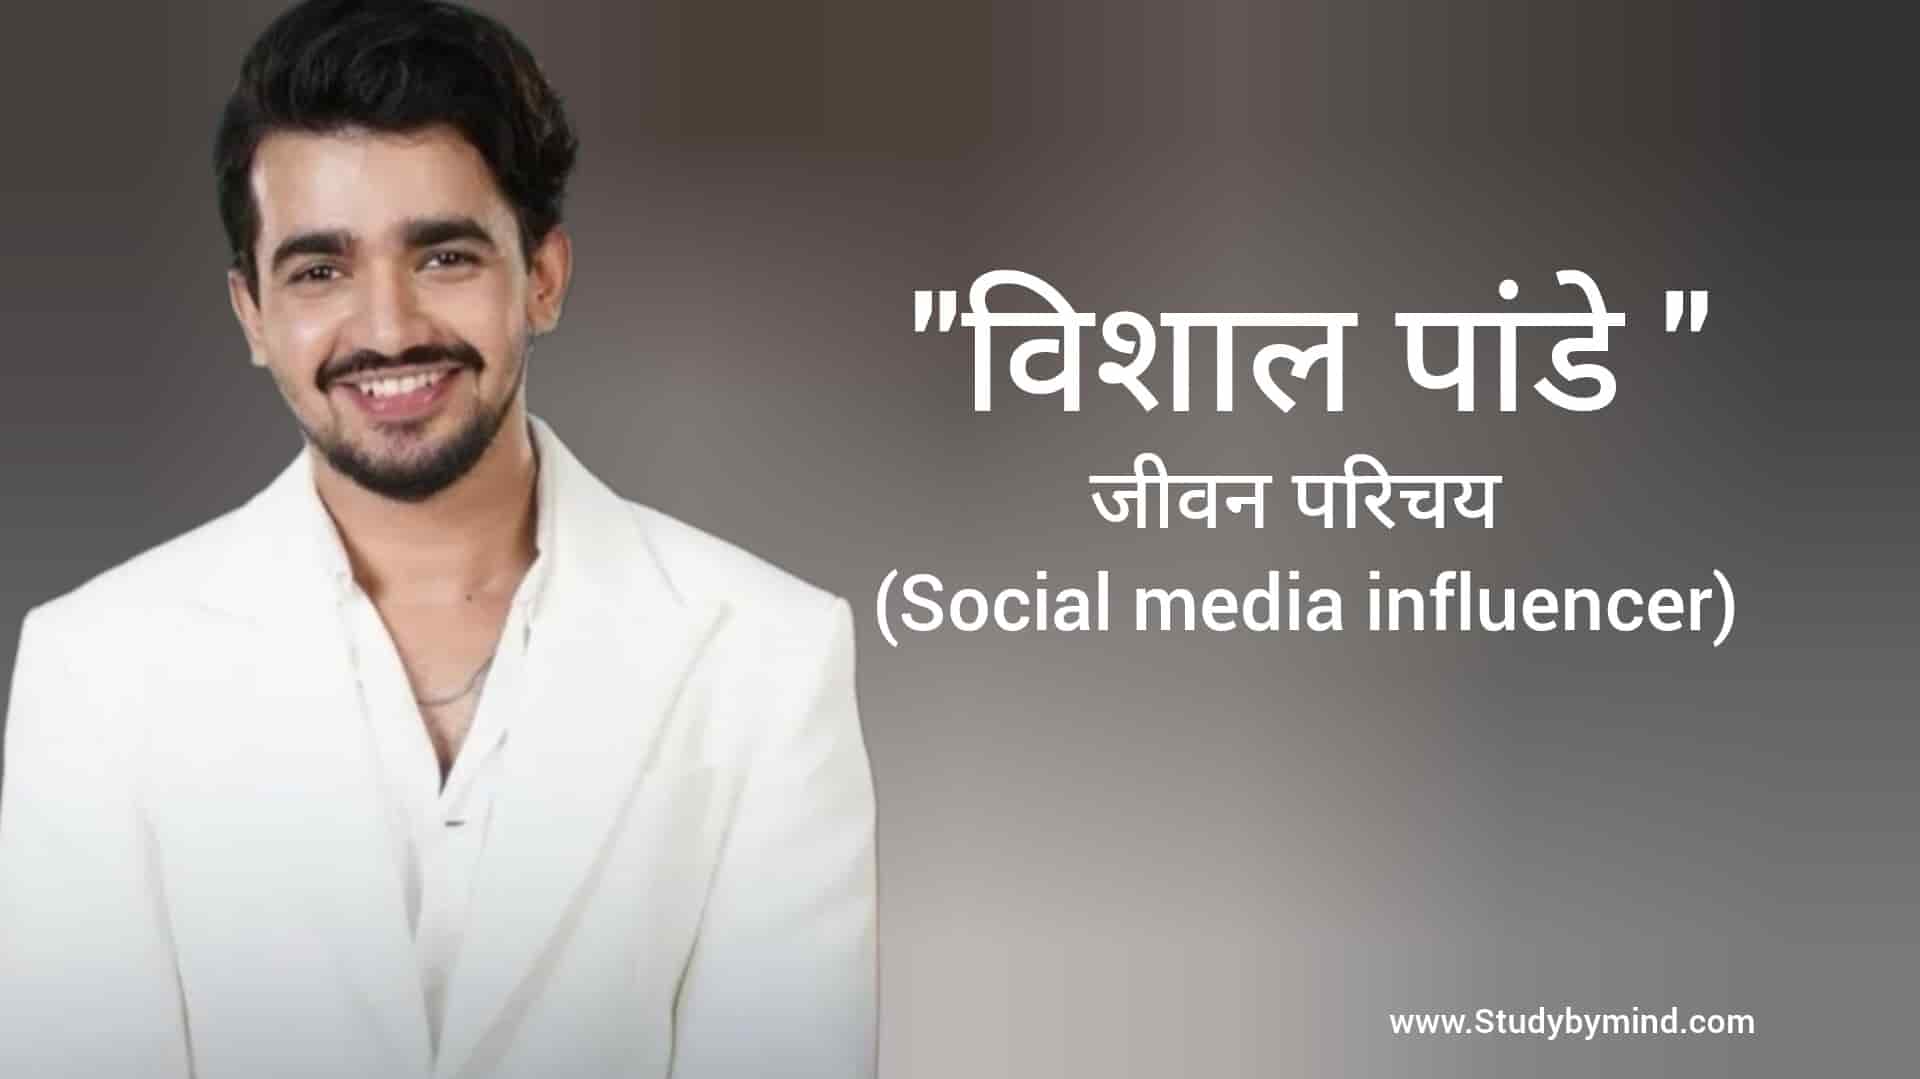 You are currently viewing विशाल पांडे जीवन परिचय Vishal pandey biography in hindi (Social media influencer)